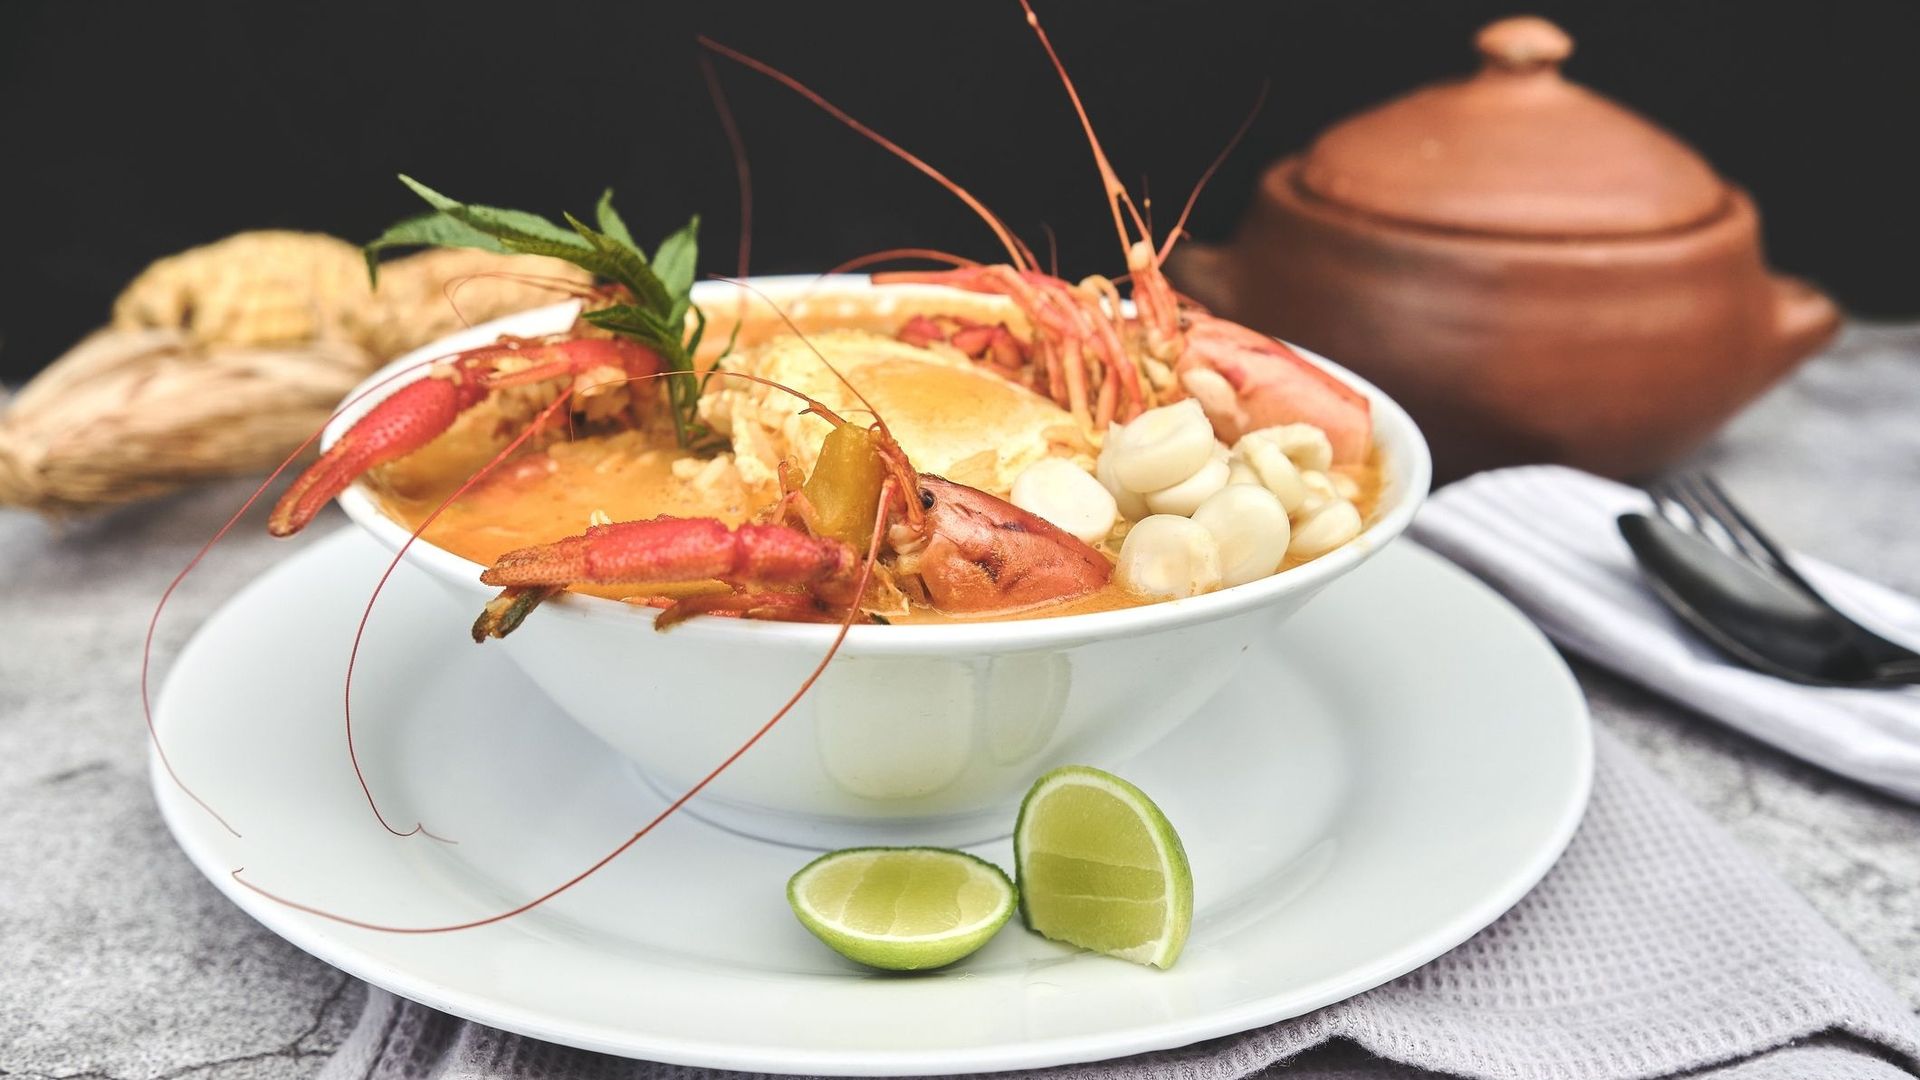 La chupe de camarones, une recette typique du Pérou.